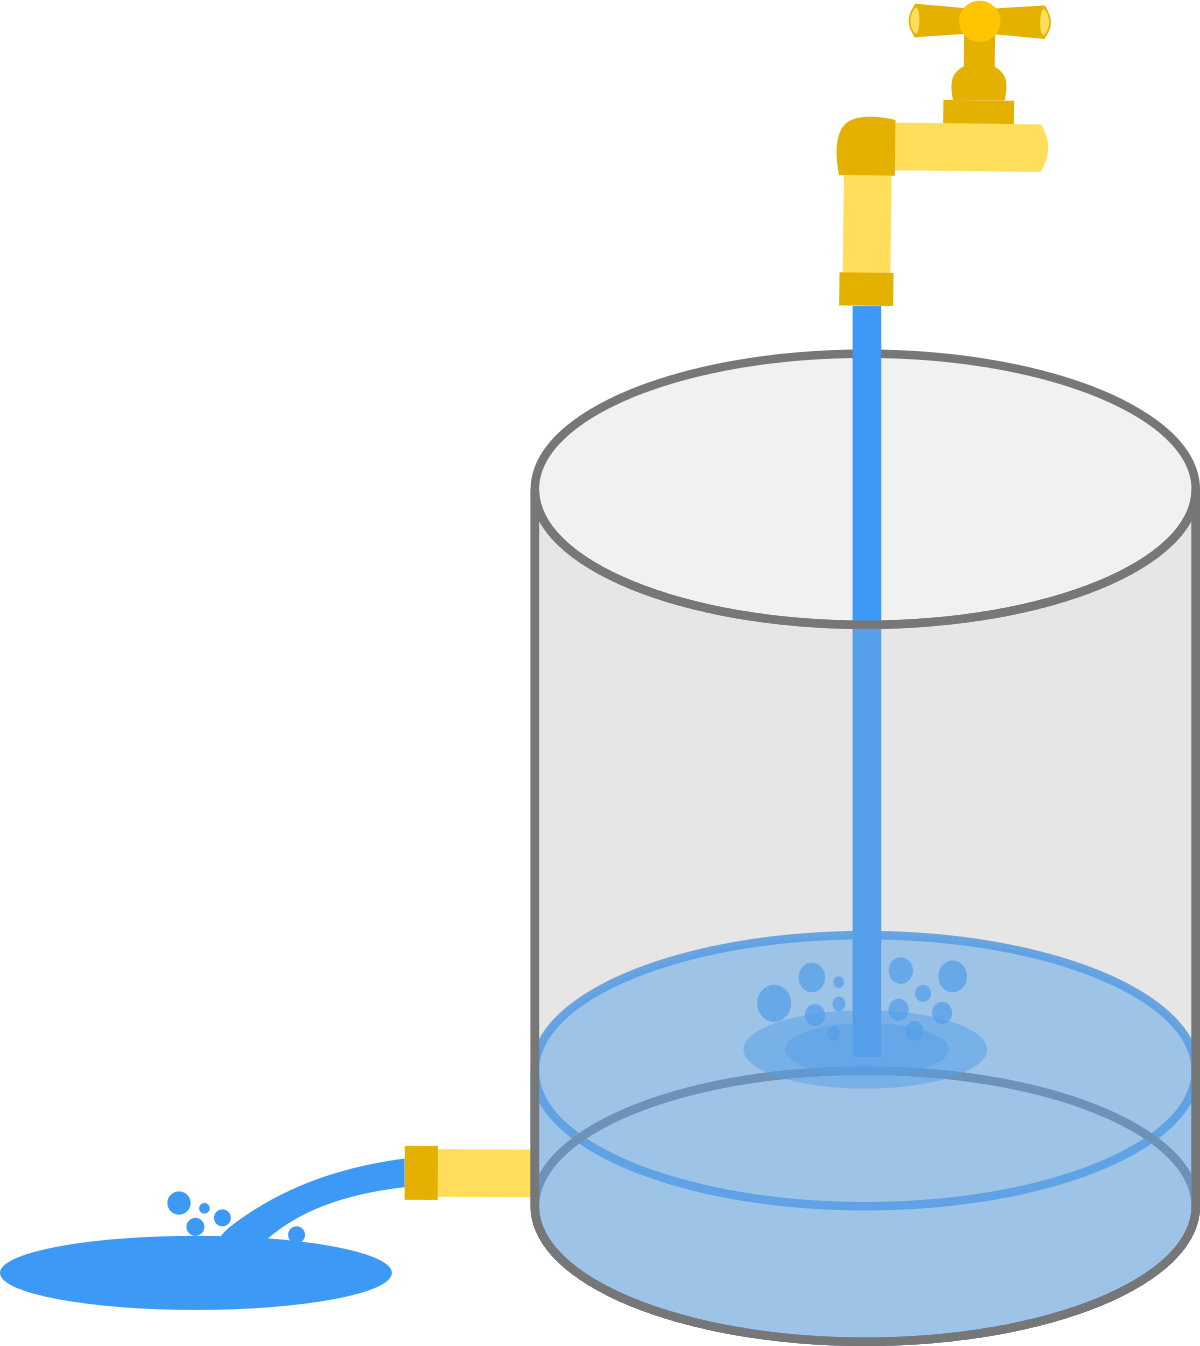  intermediate practice problems. Clipart water water flow